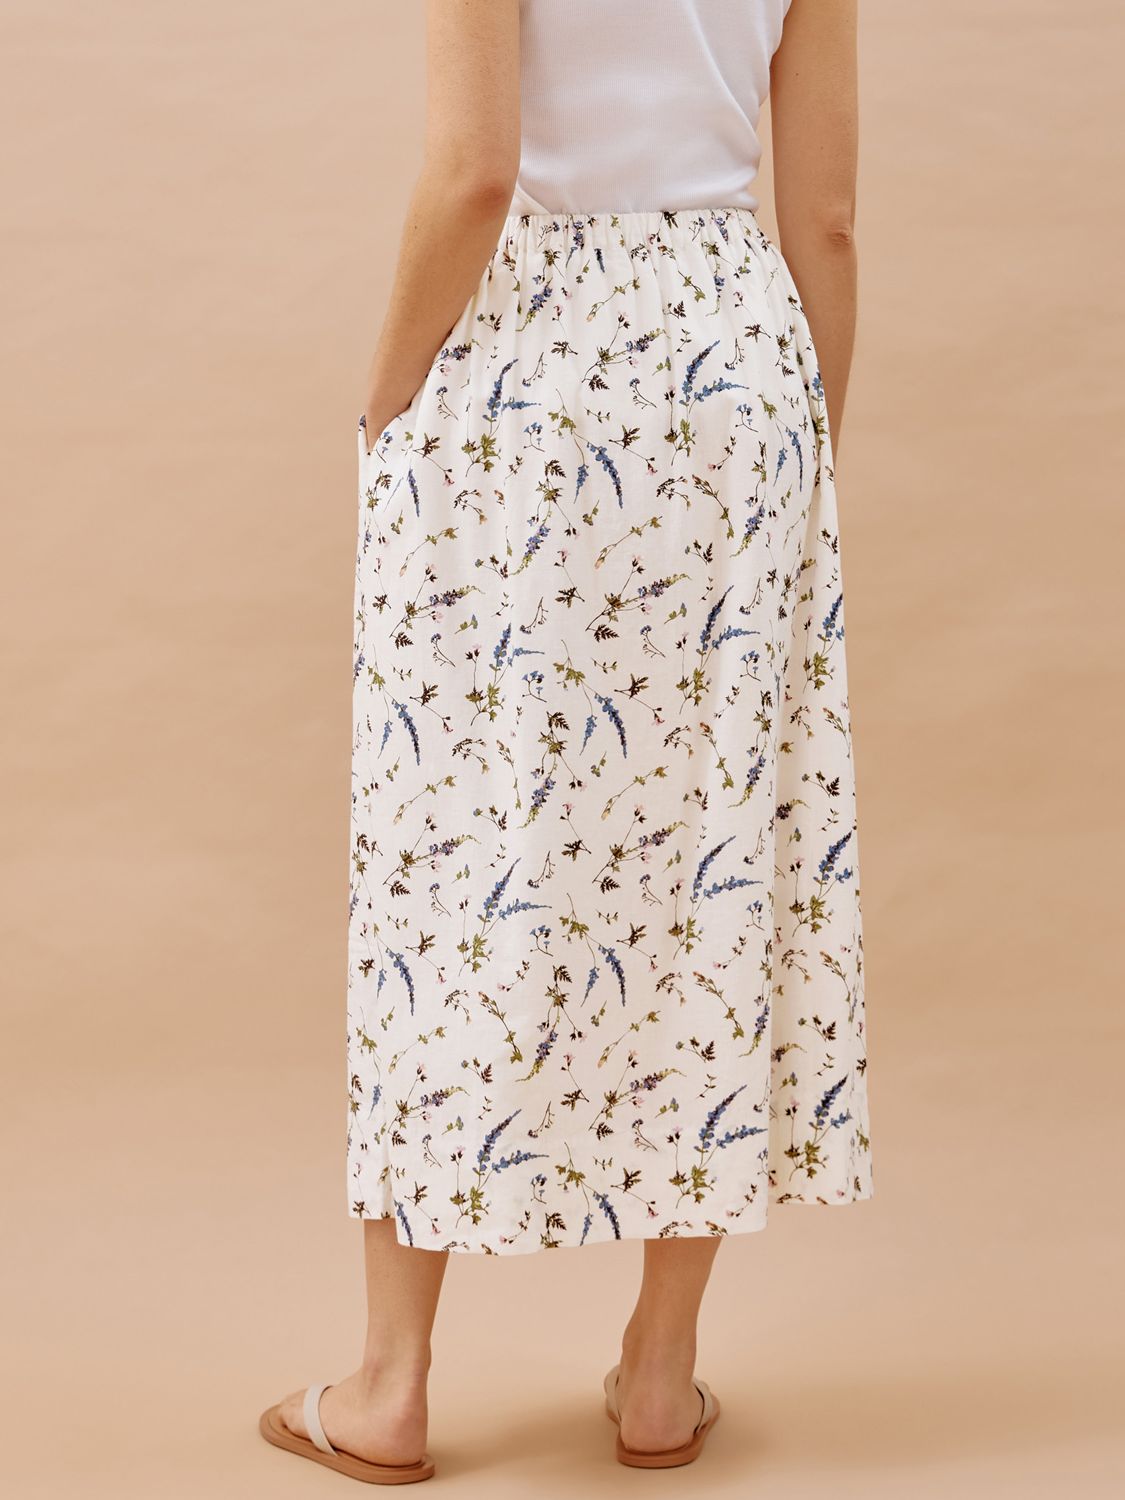 Buy Albaray Sprig Floral Skirt, White/Multi Online at johnlewis.com